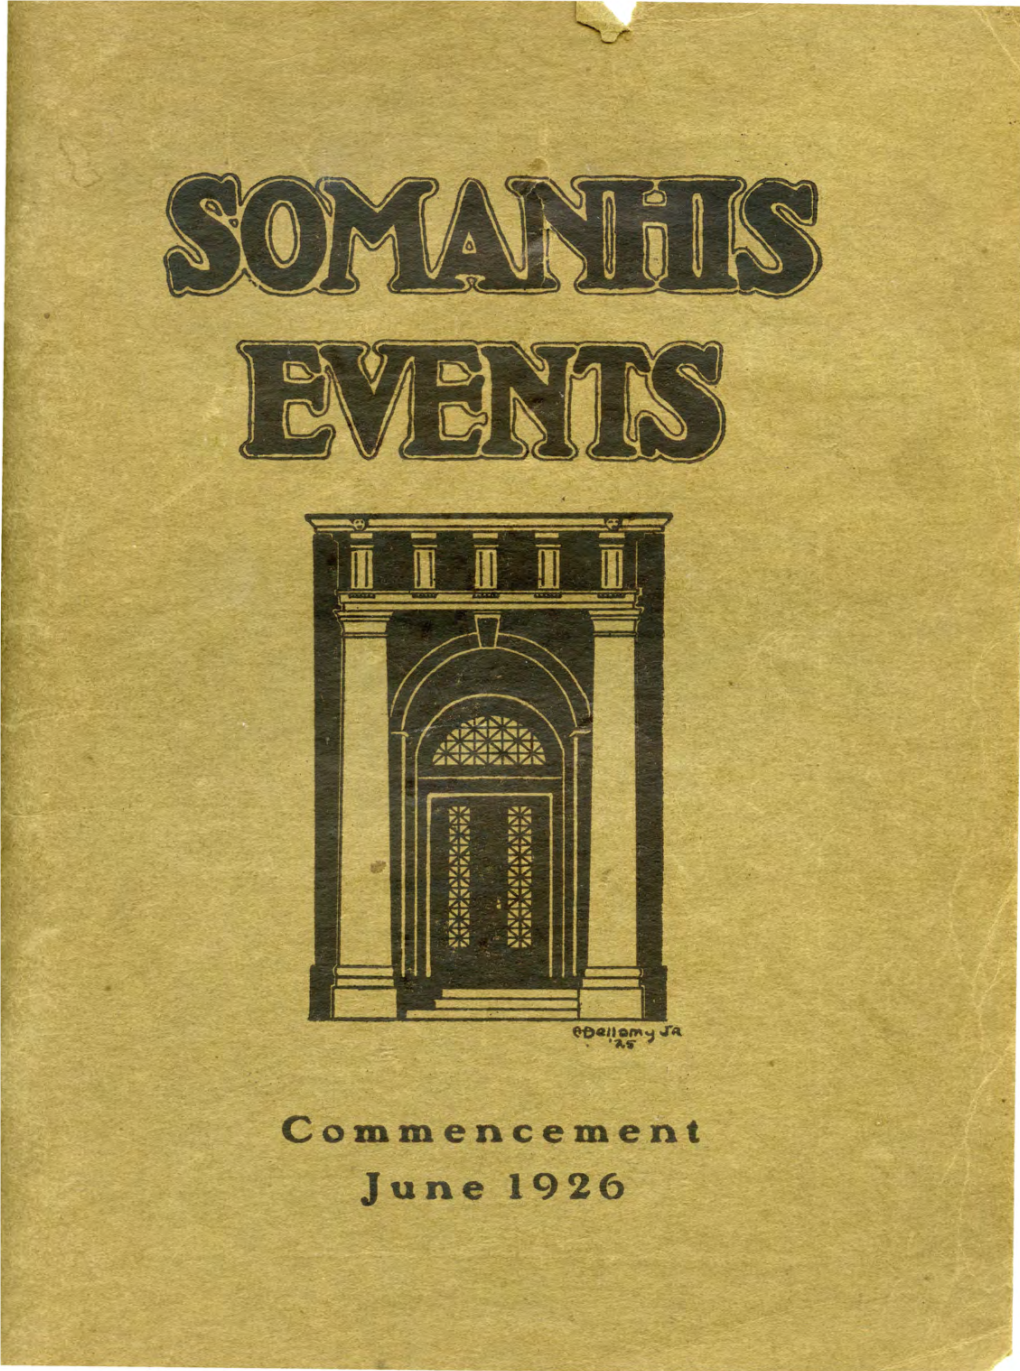 "Somanhis" 1926